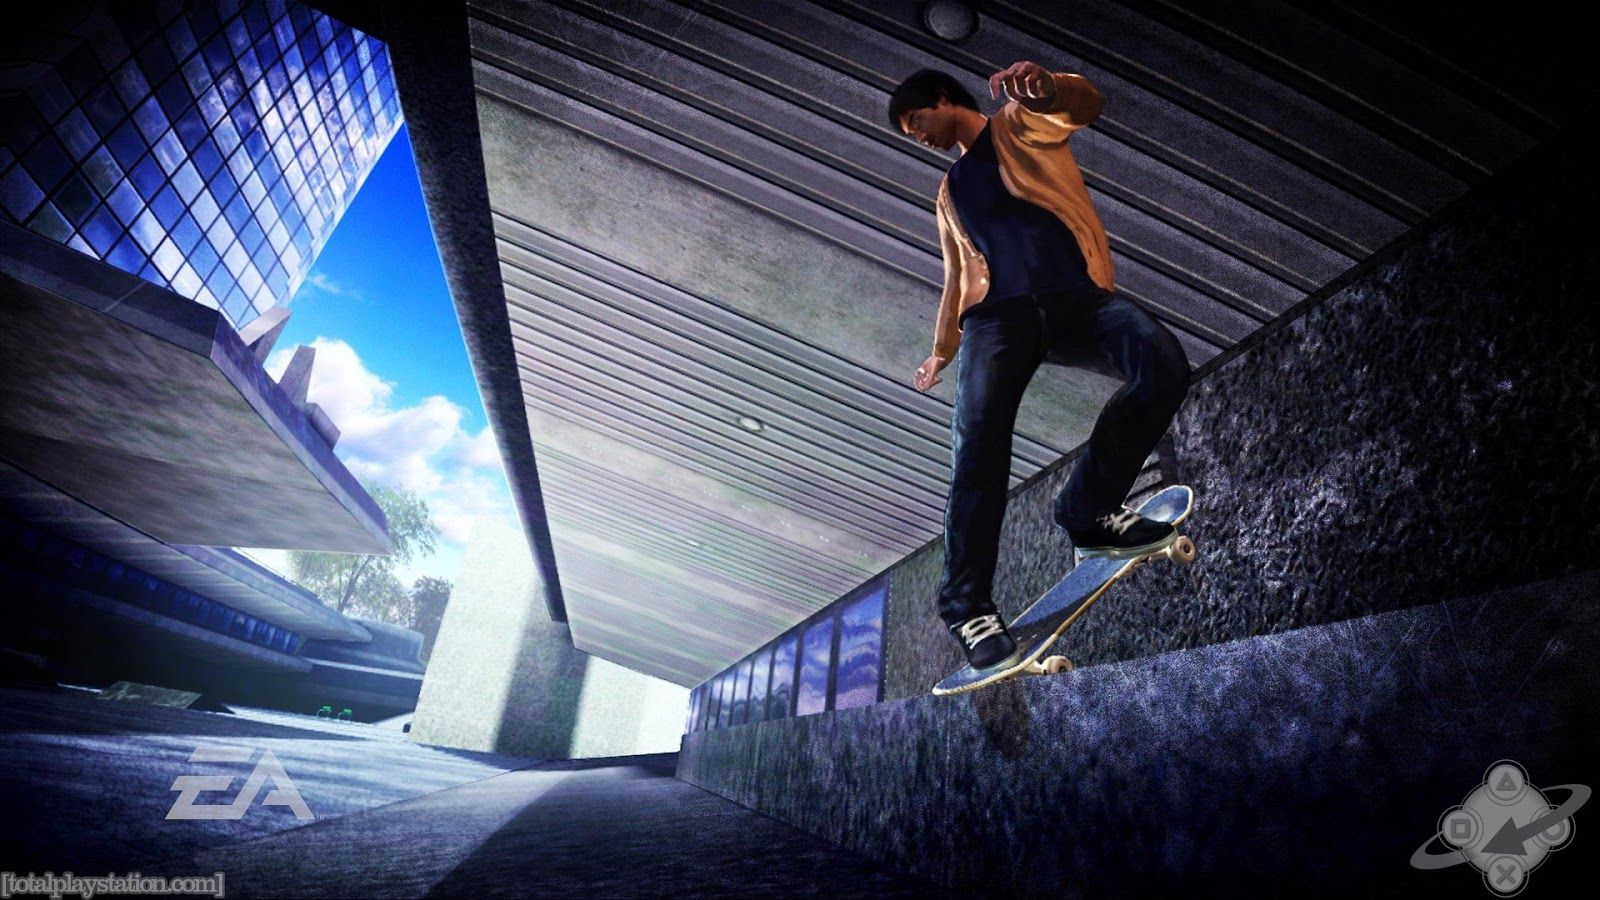 Free download wallpaper HD for mac Skateboarding Wallpaper HD